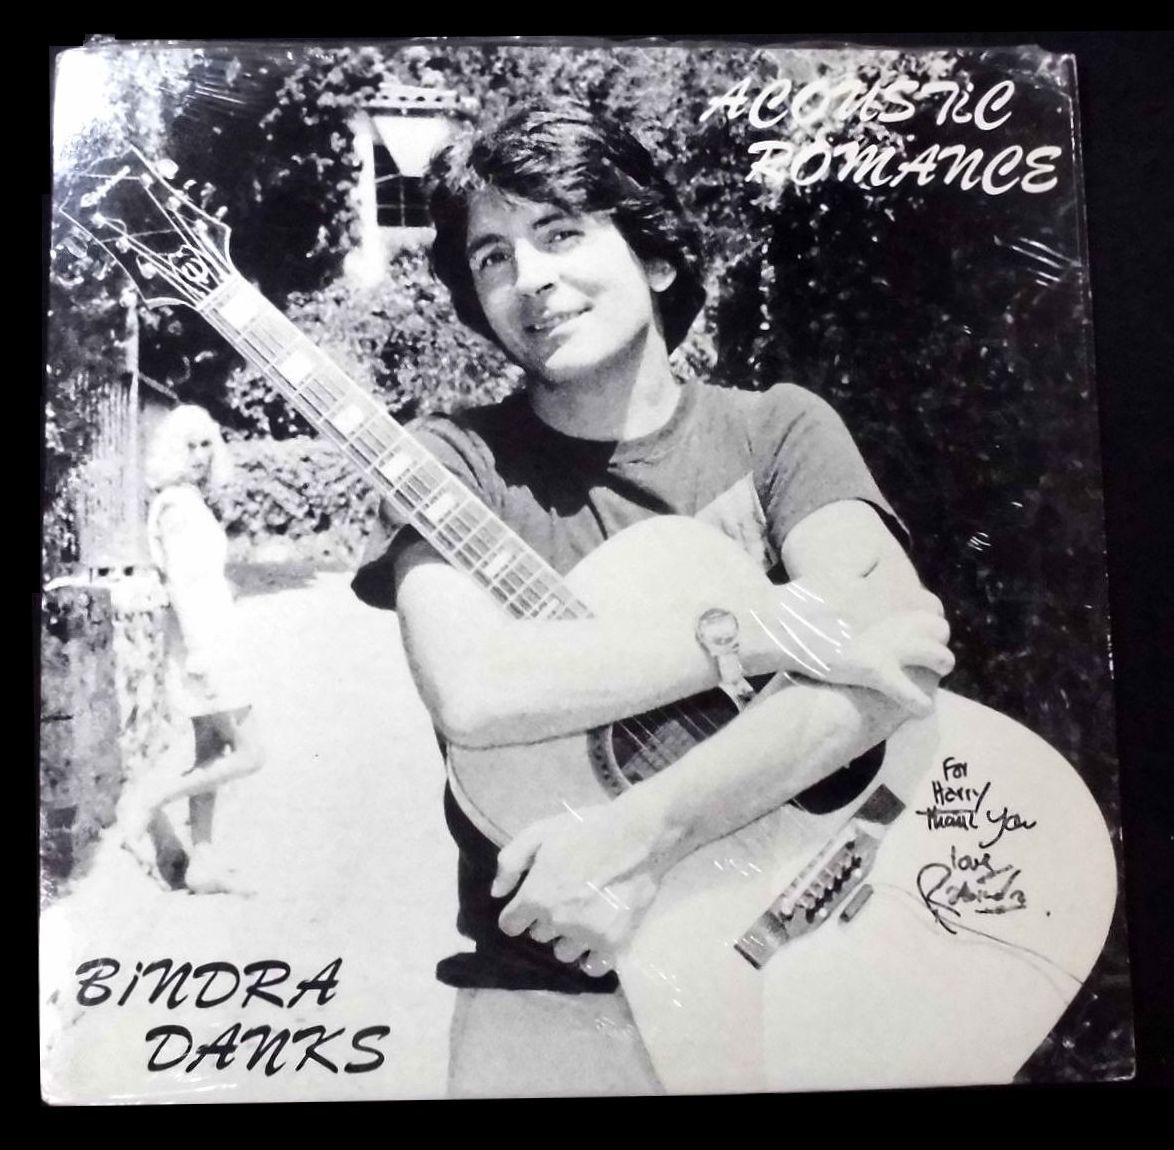 ●US-Itchy Zebra Recordsオリジナルw/Shrink,’82,Private Goodtime SSW!! Bindra Danks / Acoustic Romance_画像1